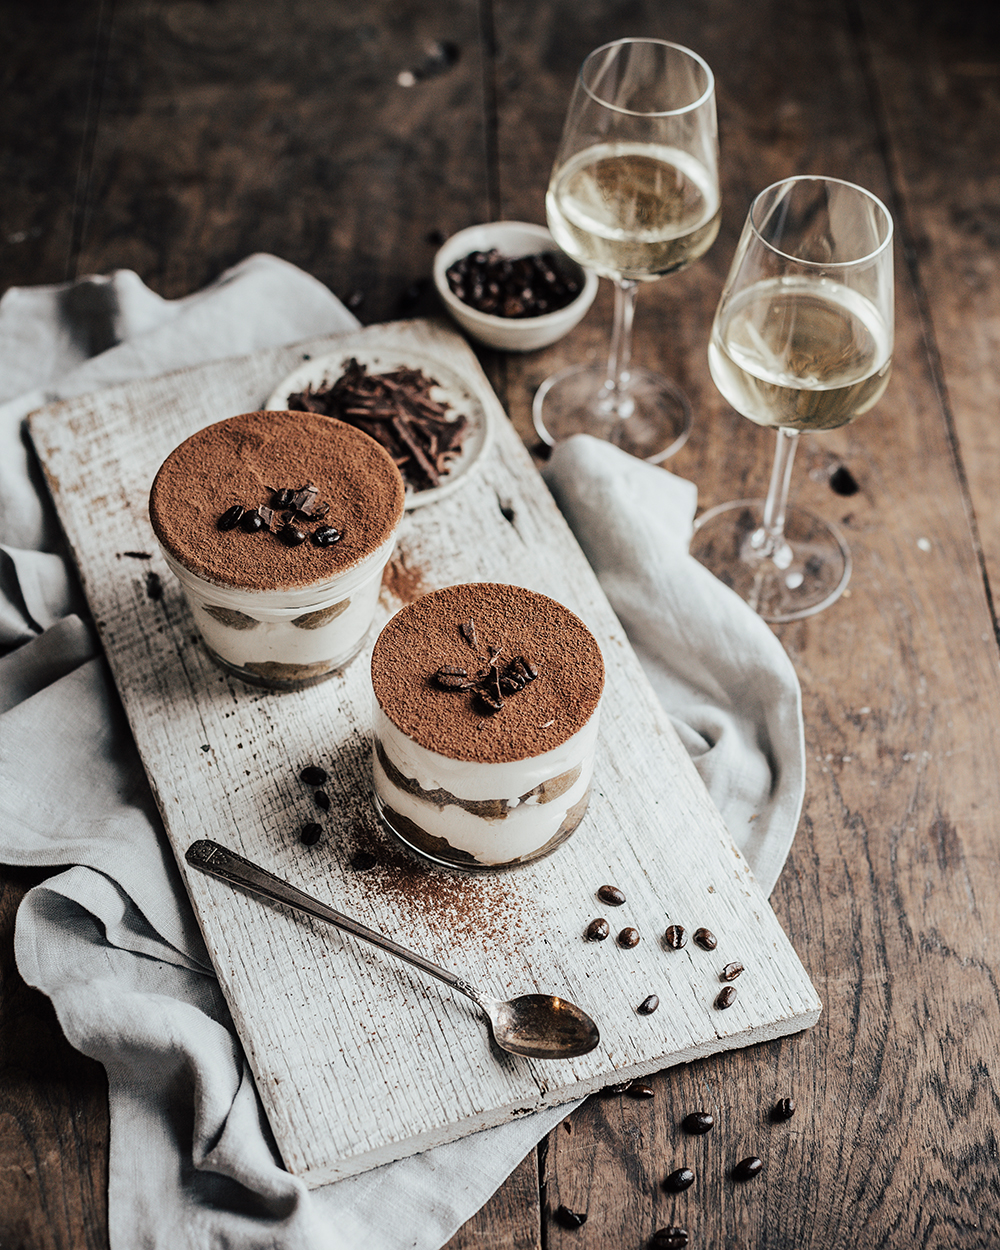 Tiramisu with coffee beans | Offizielle Website der Bordeaux